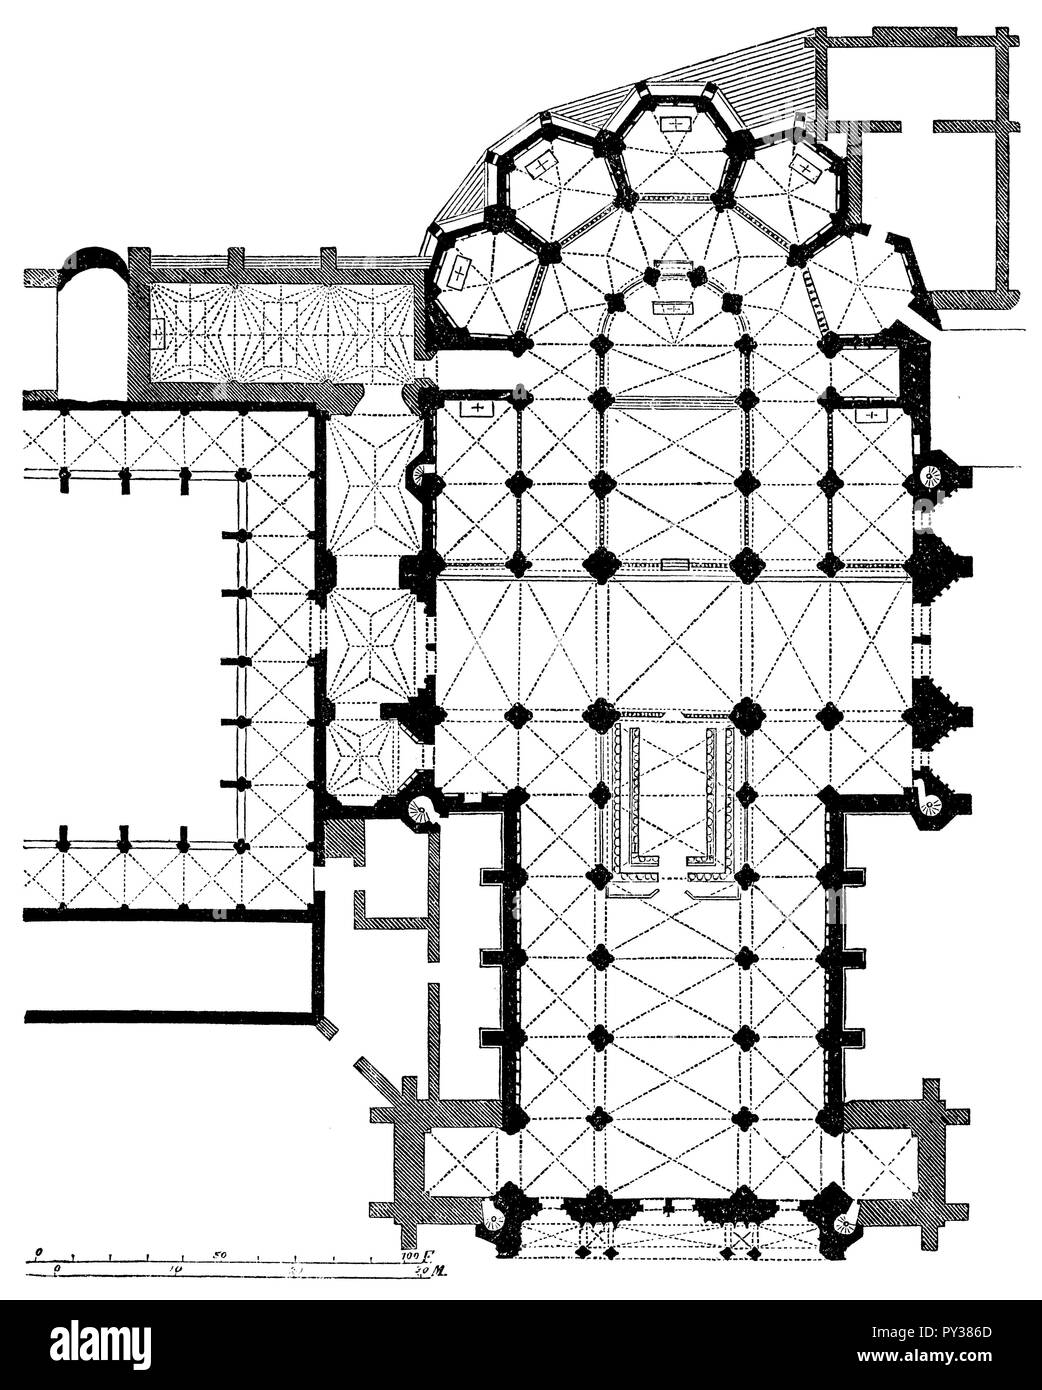 Cathedral Of Leon Floor Plan 1870 Stock Photo 223192437 Alamy